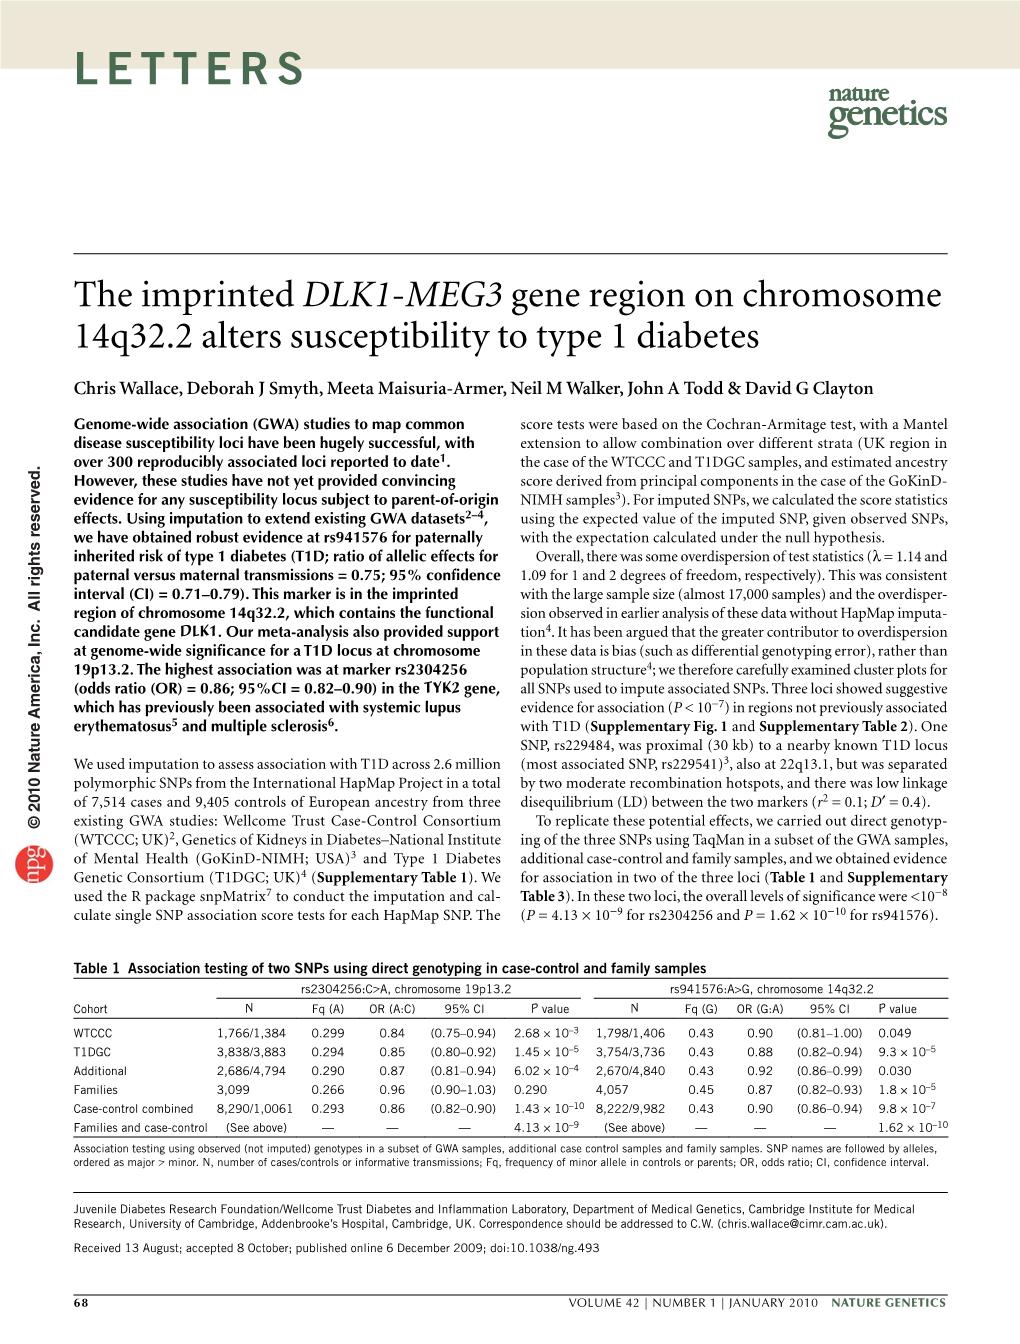 The Imprinted DLK1-MEG3 Gene Region on Chromosome 14Q32.2 Alters Susceptibility to Type 1 Diabetes